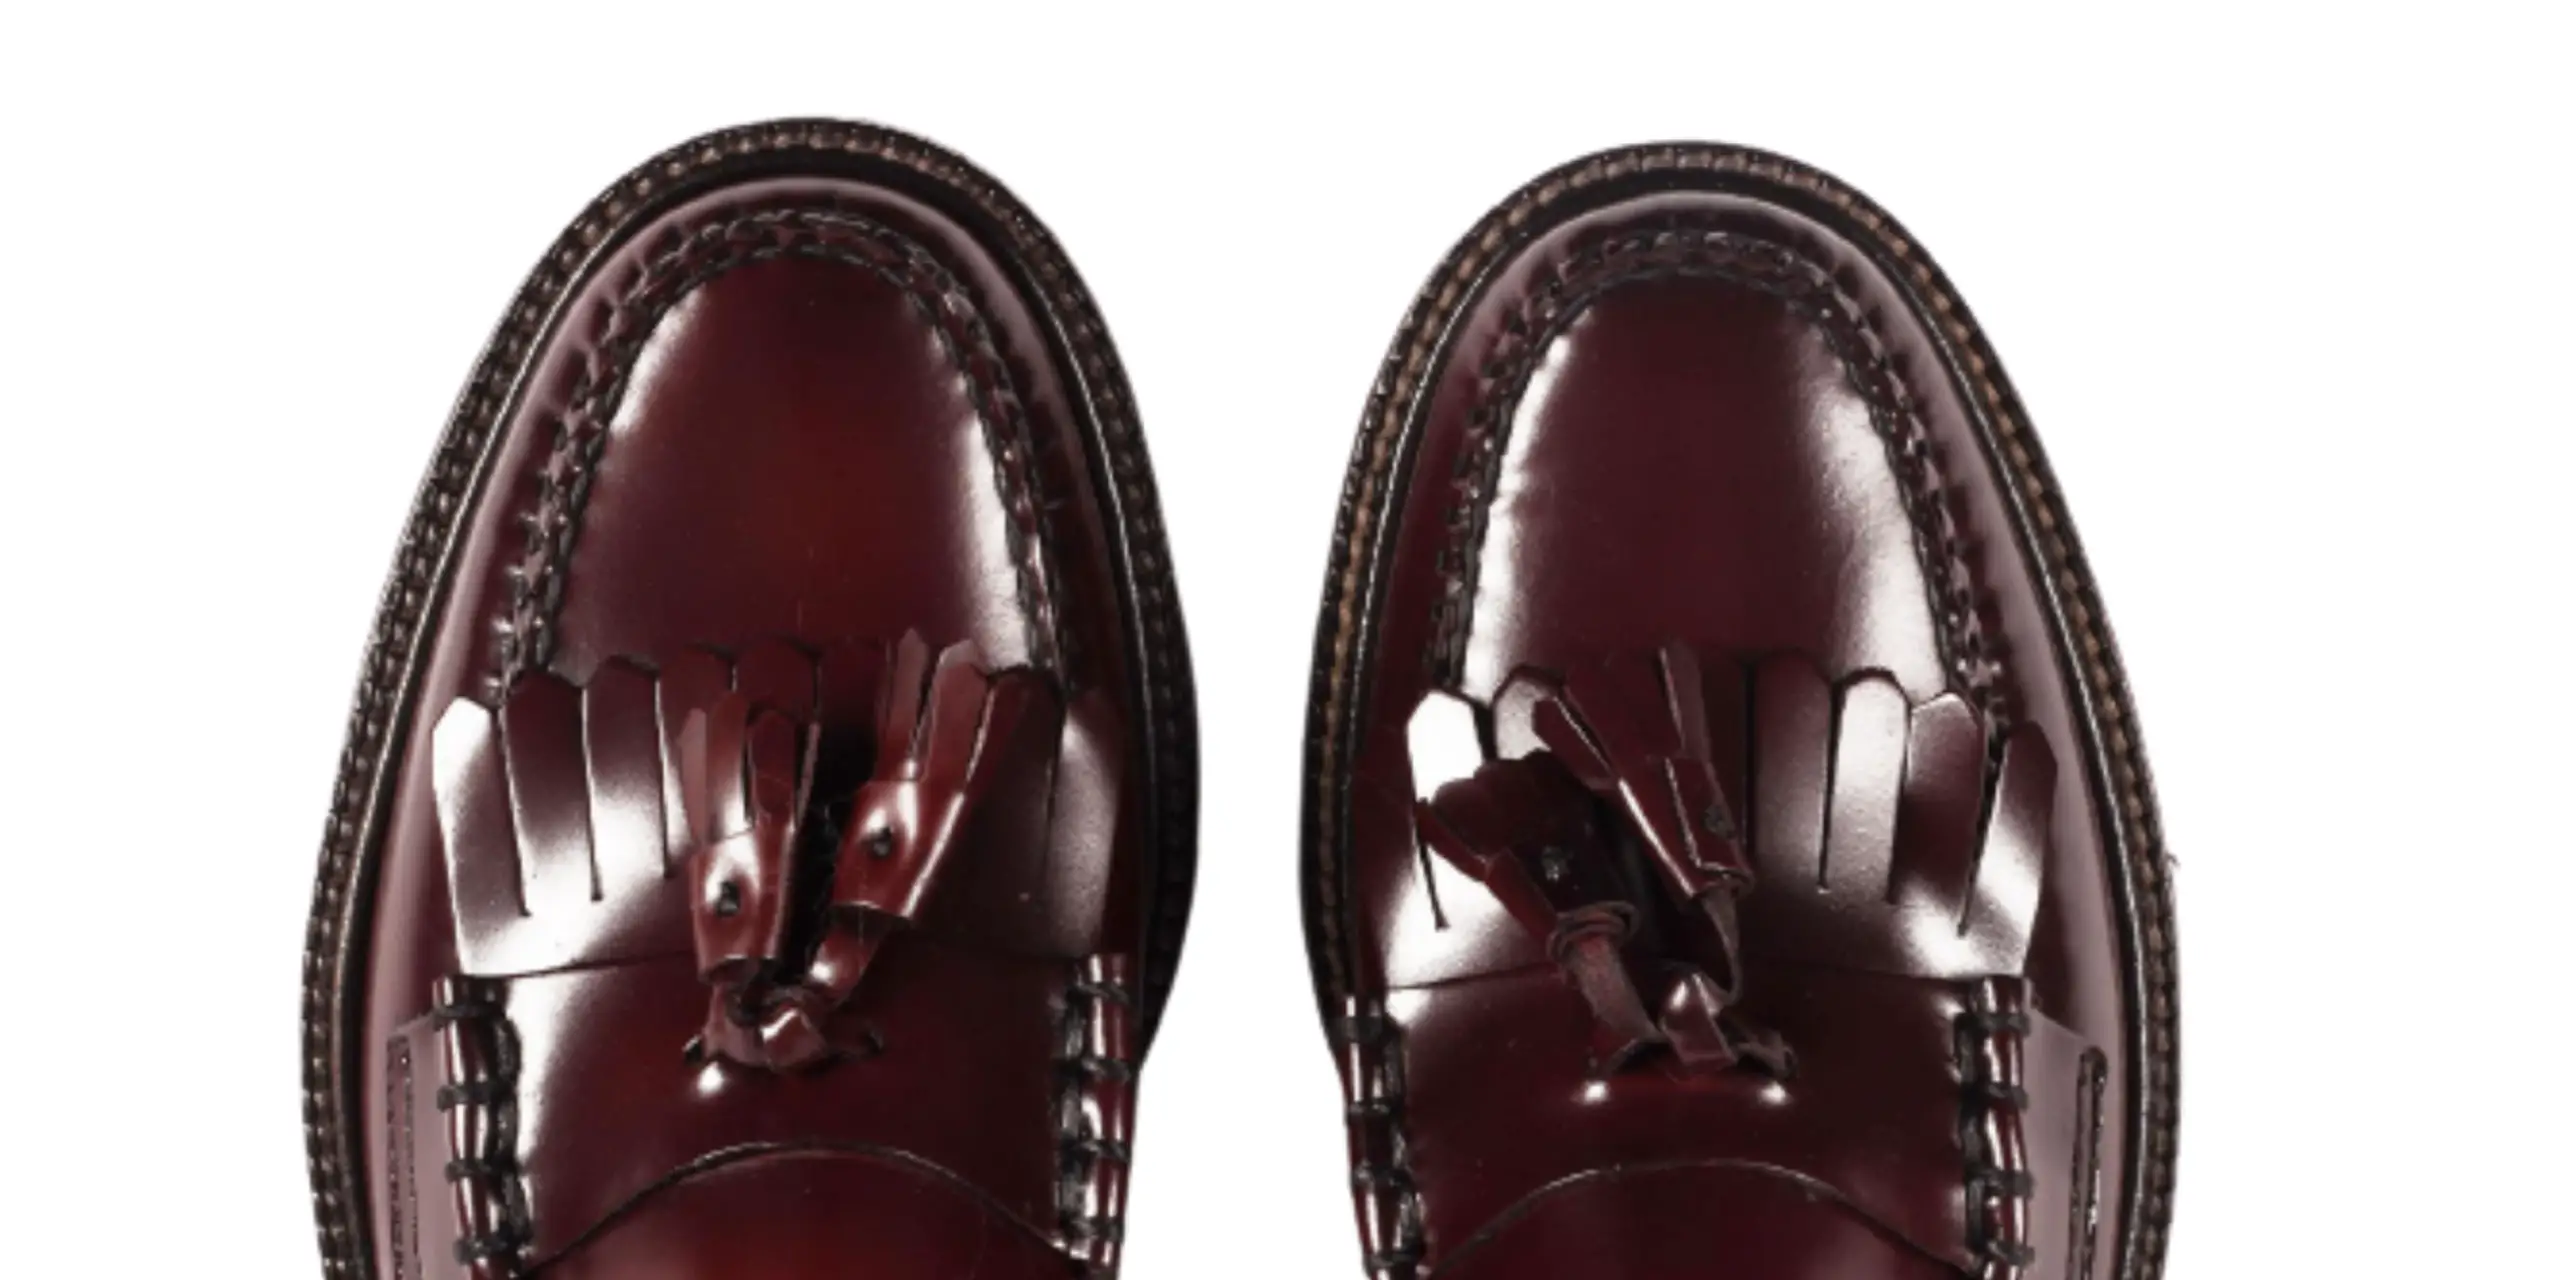 Kiltie — Types of Men's Formal Shoes